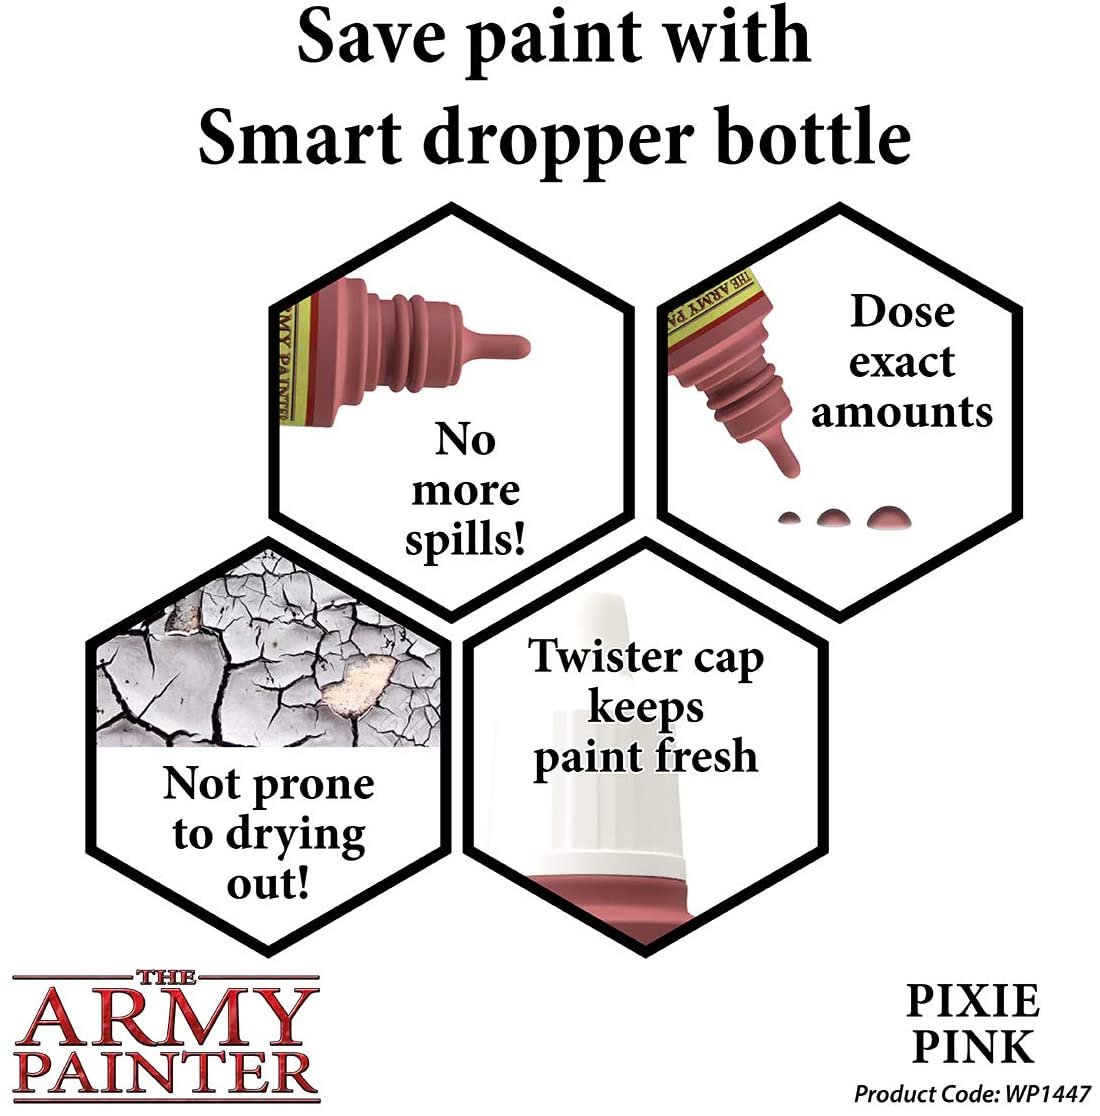 The Army Painter - Warpaints: Pixie Pink (18ml/0.6oz)